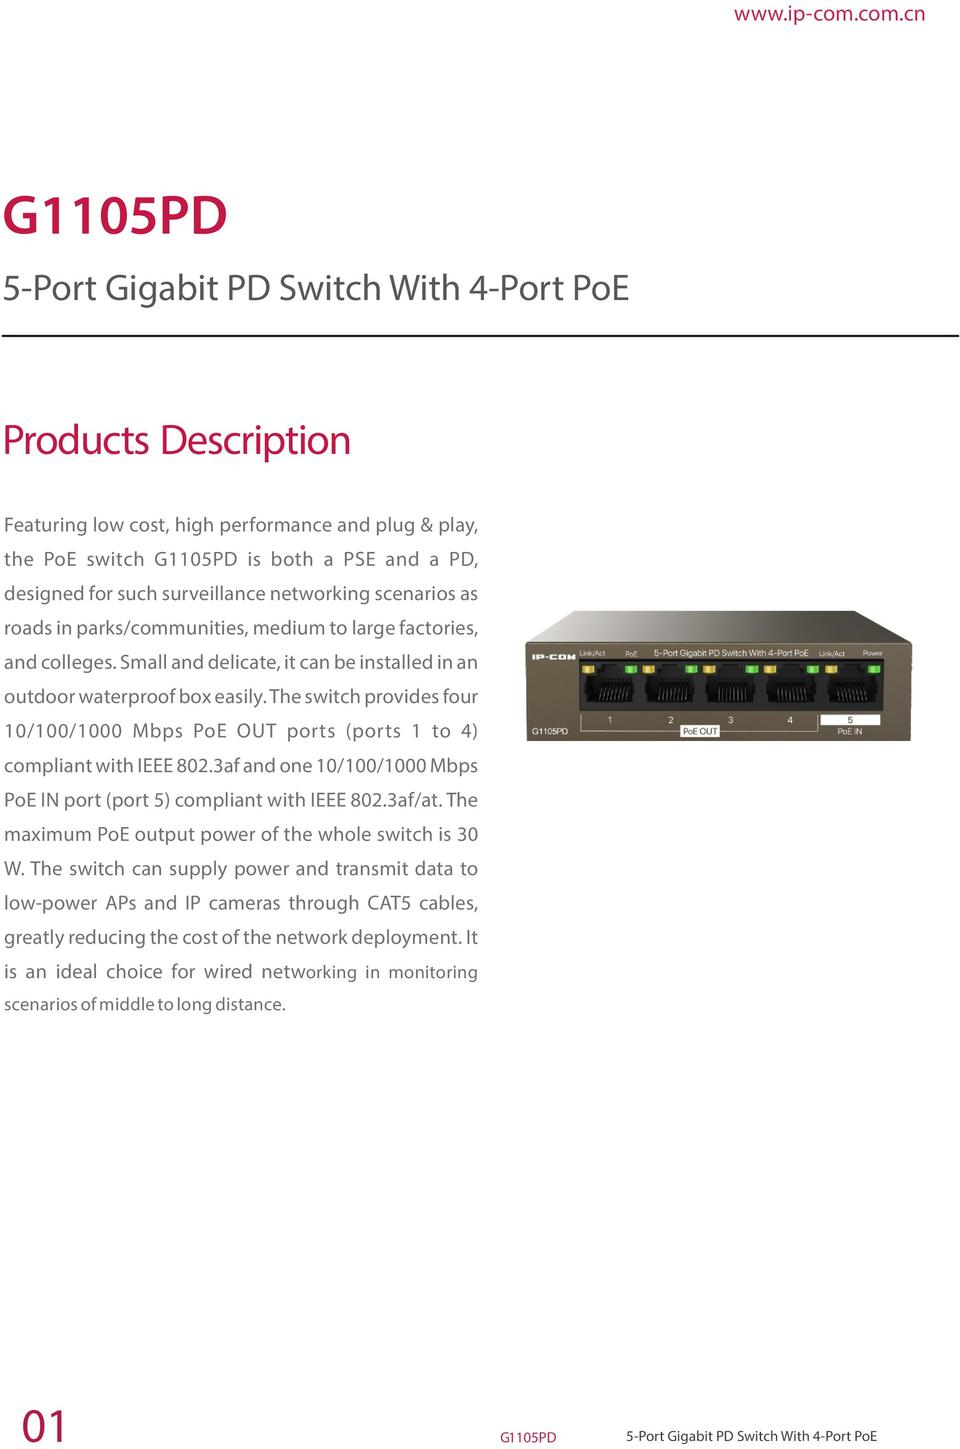 IP-COM 5 Port Gigabit PD Unmanaged Switch with 4-Port PoE (splitter) 0